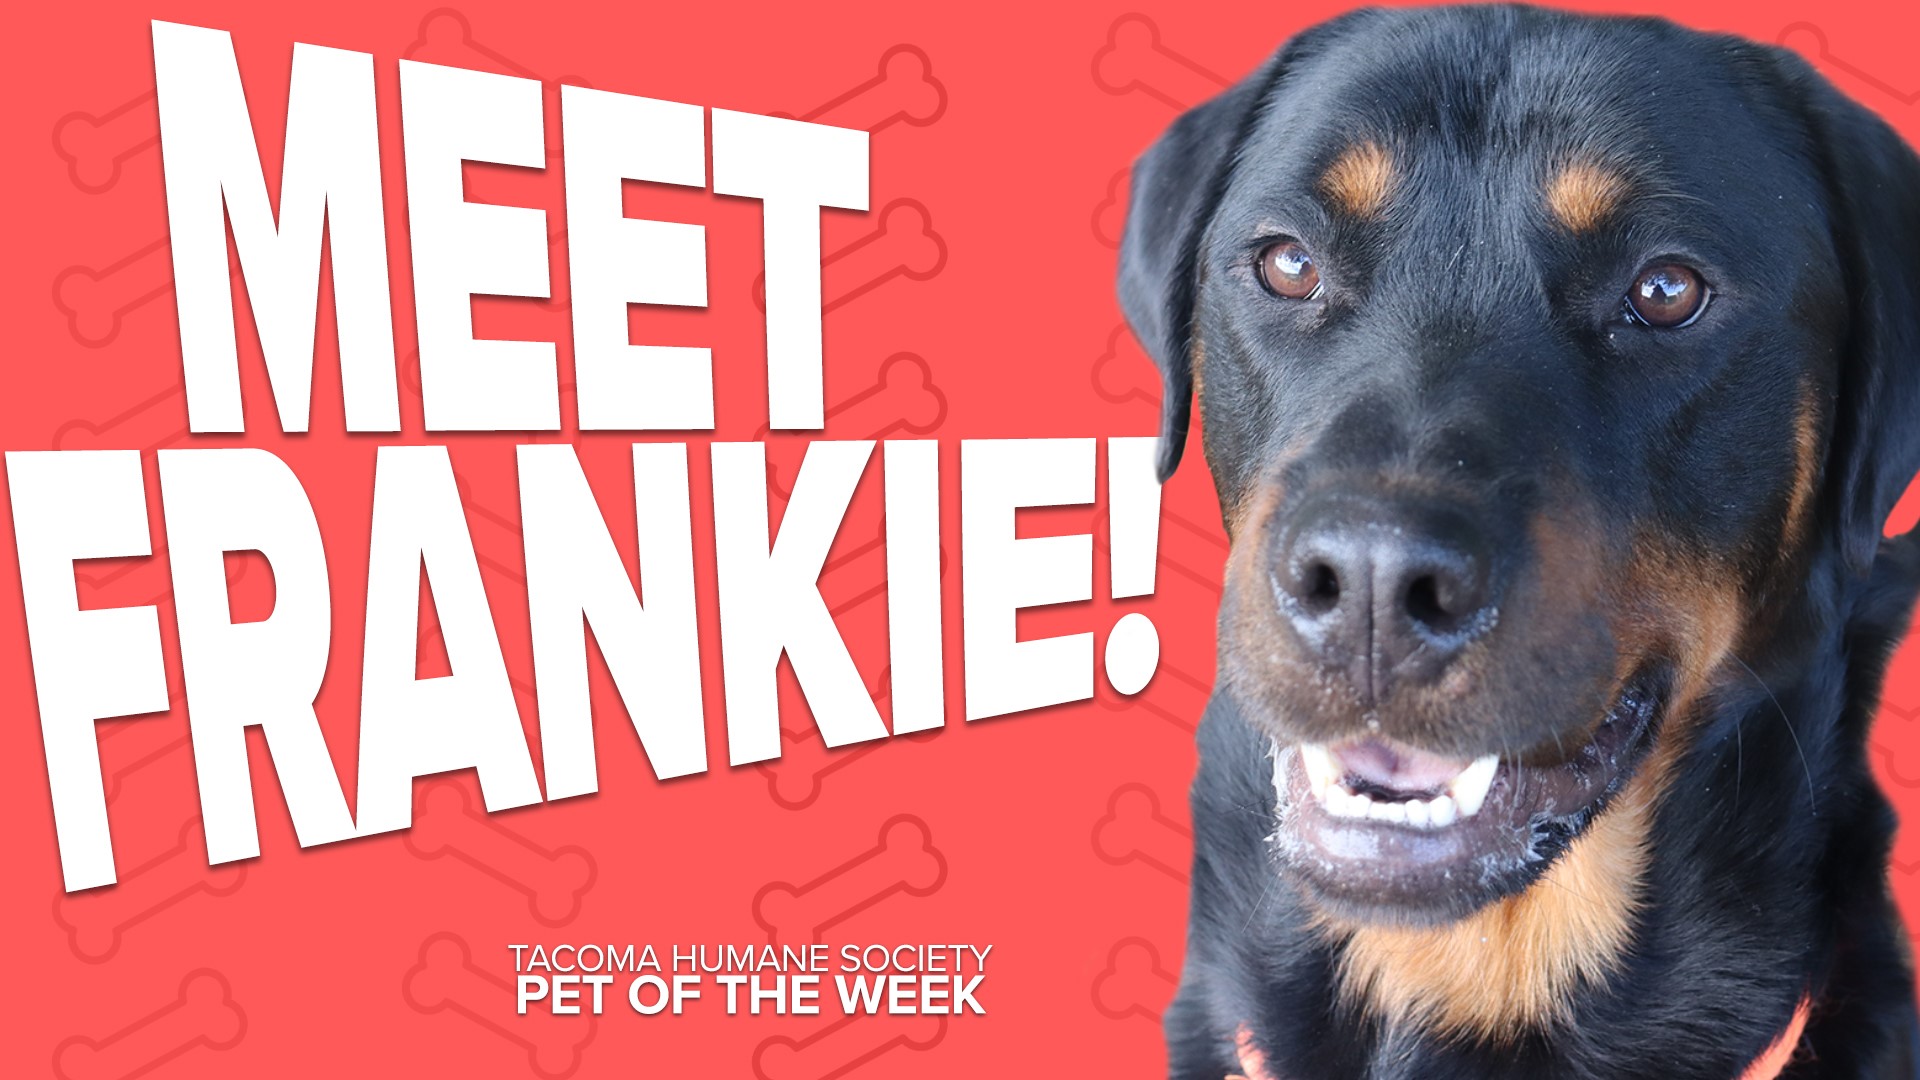 This week's featured adoptable pet of the week is Frankie!